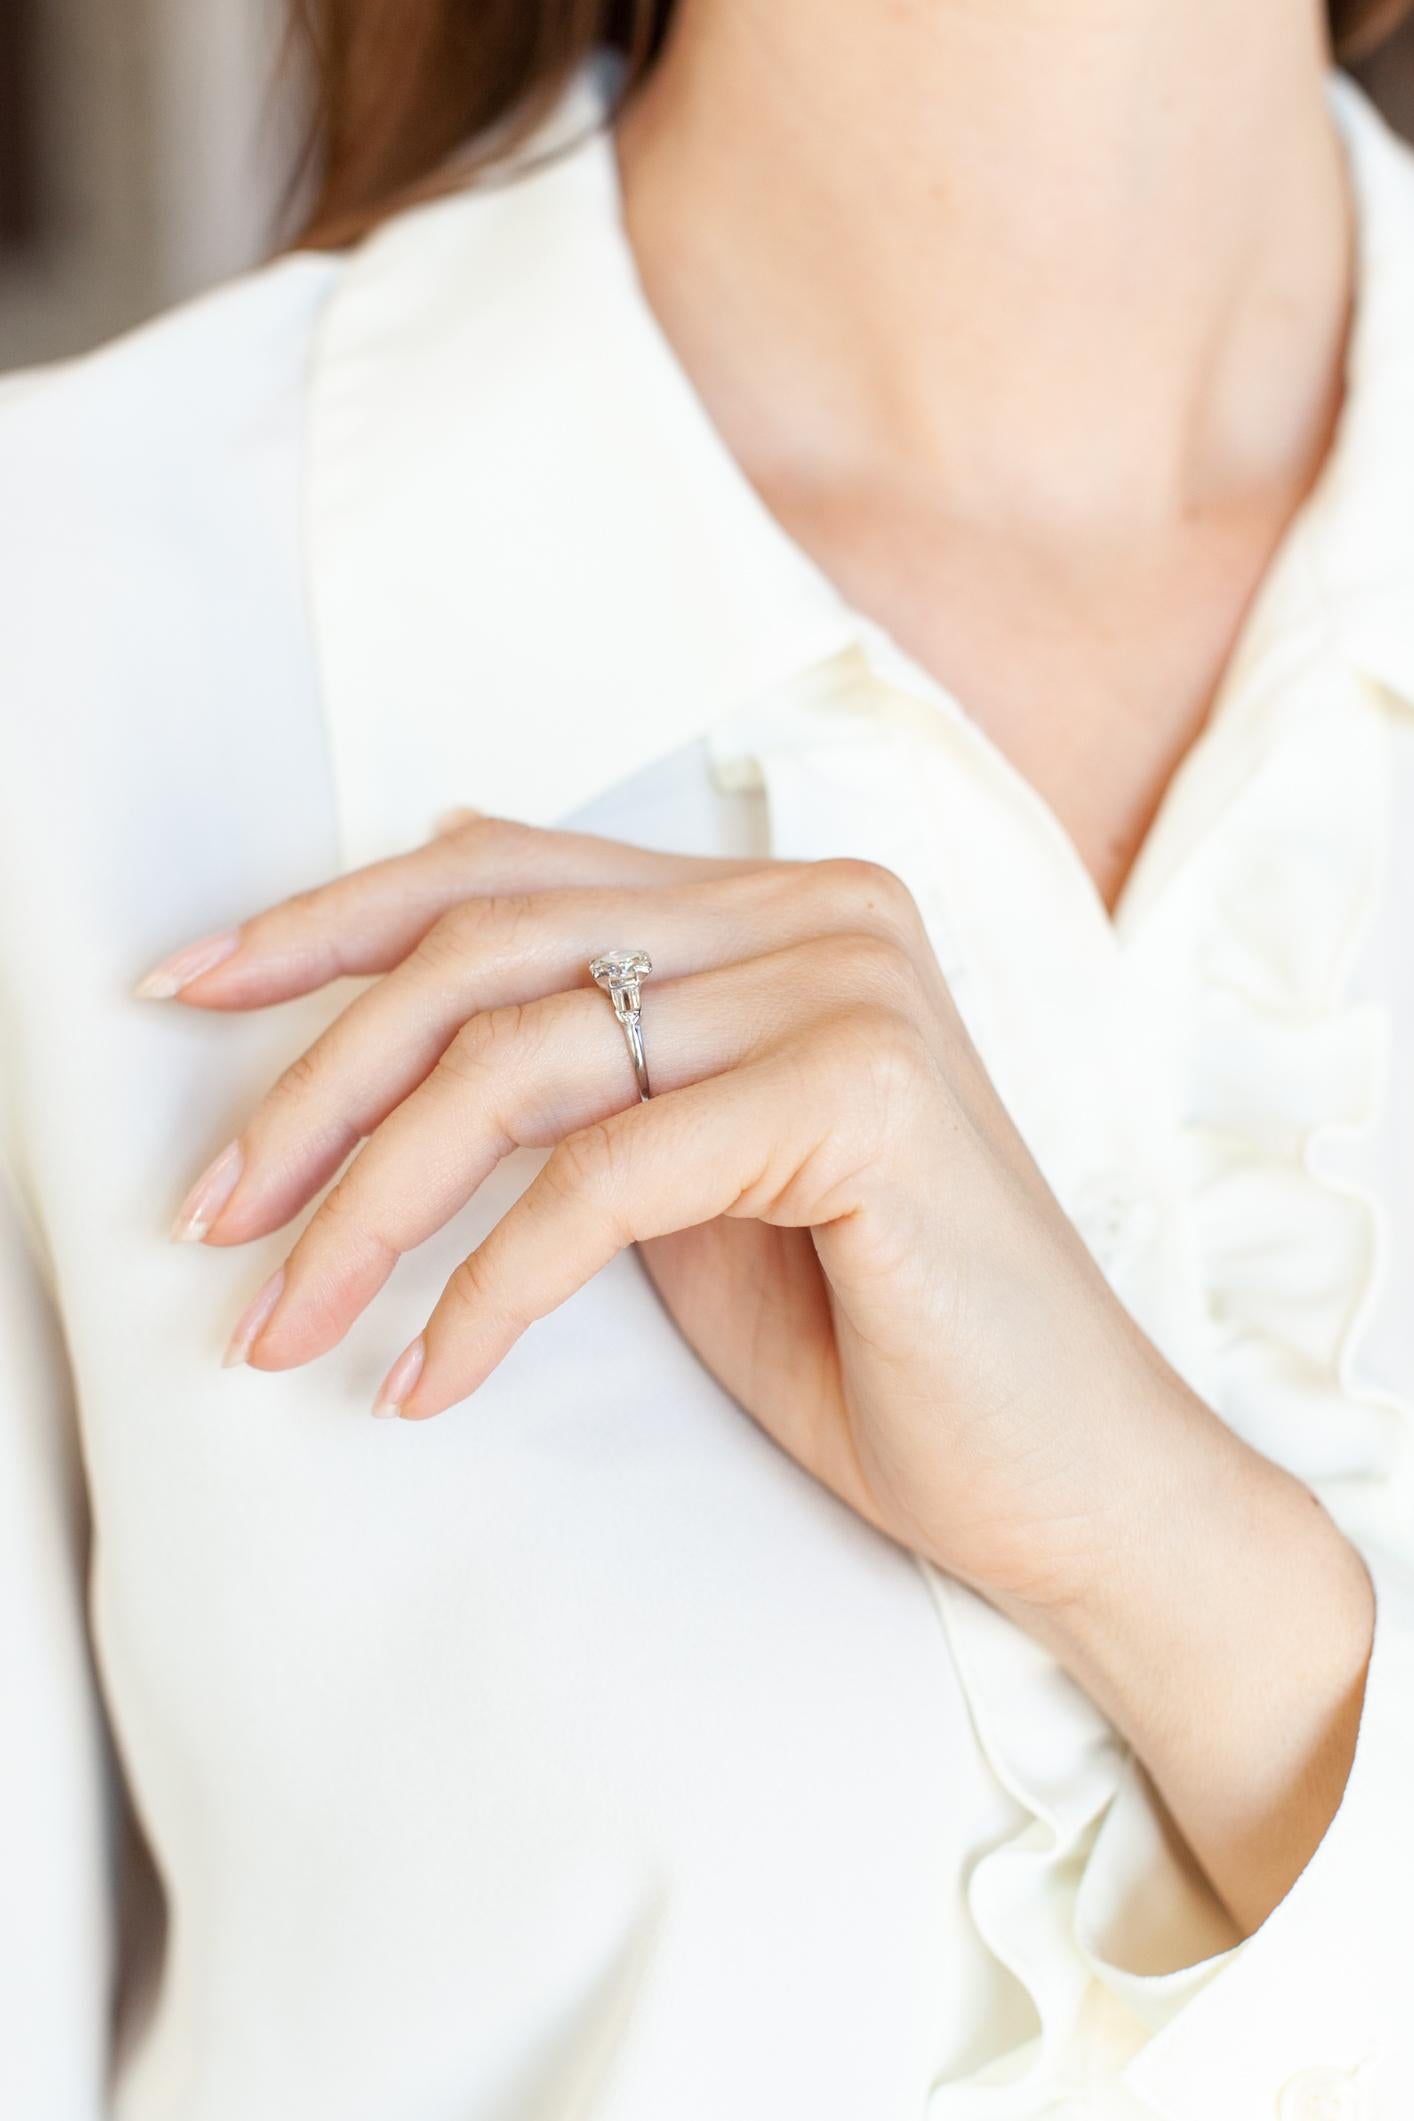 Women's Art Deco 2.00 Carat Transitional Cut Diamond GIA Certified Engagement Ring